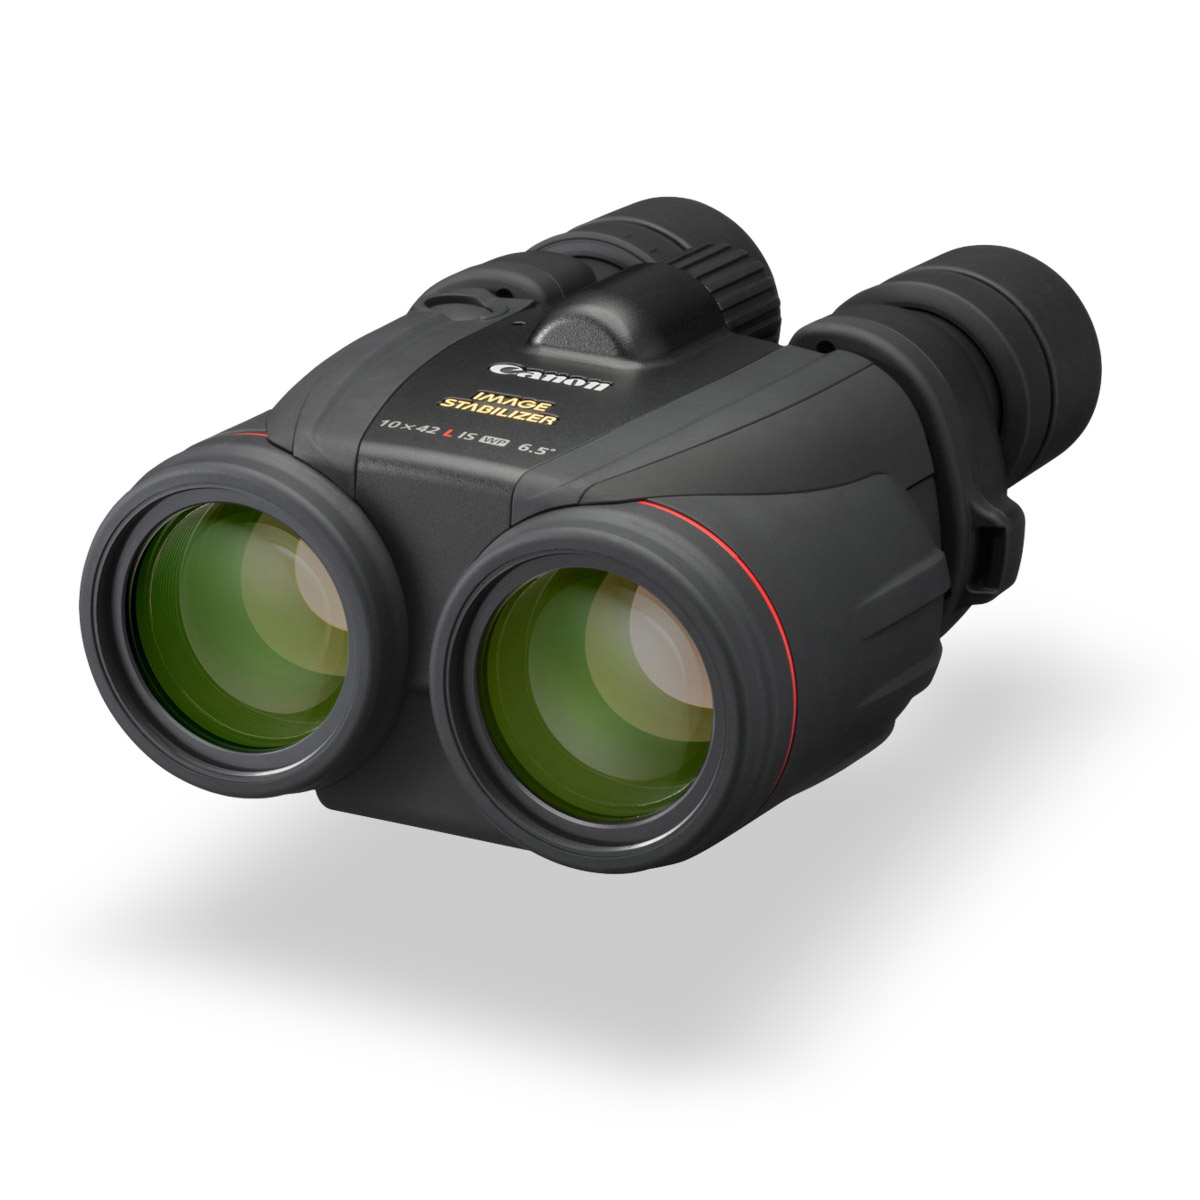 Canon 10 x 42L IS WP binoculars